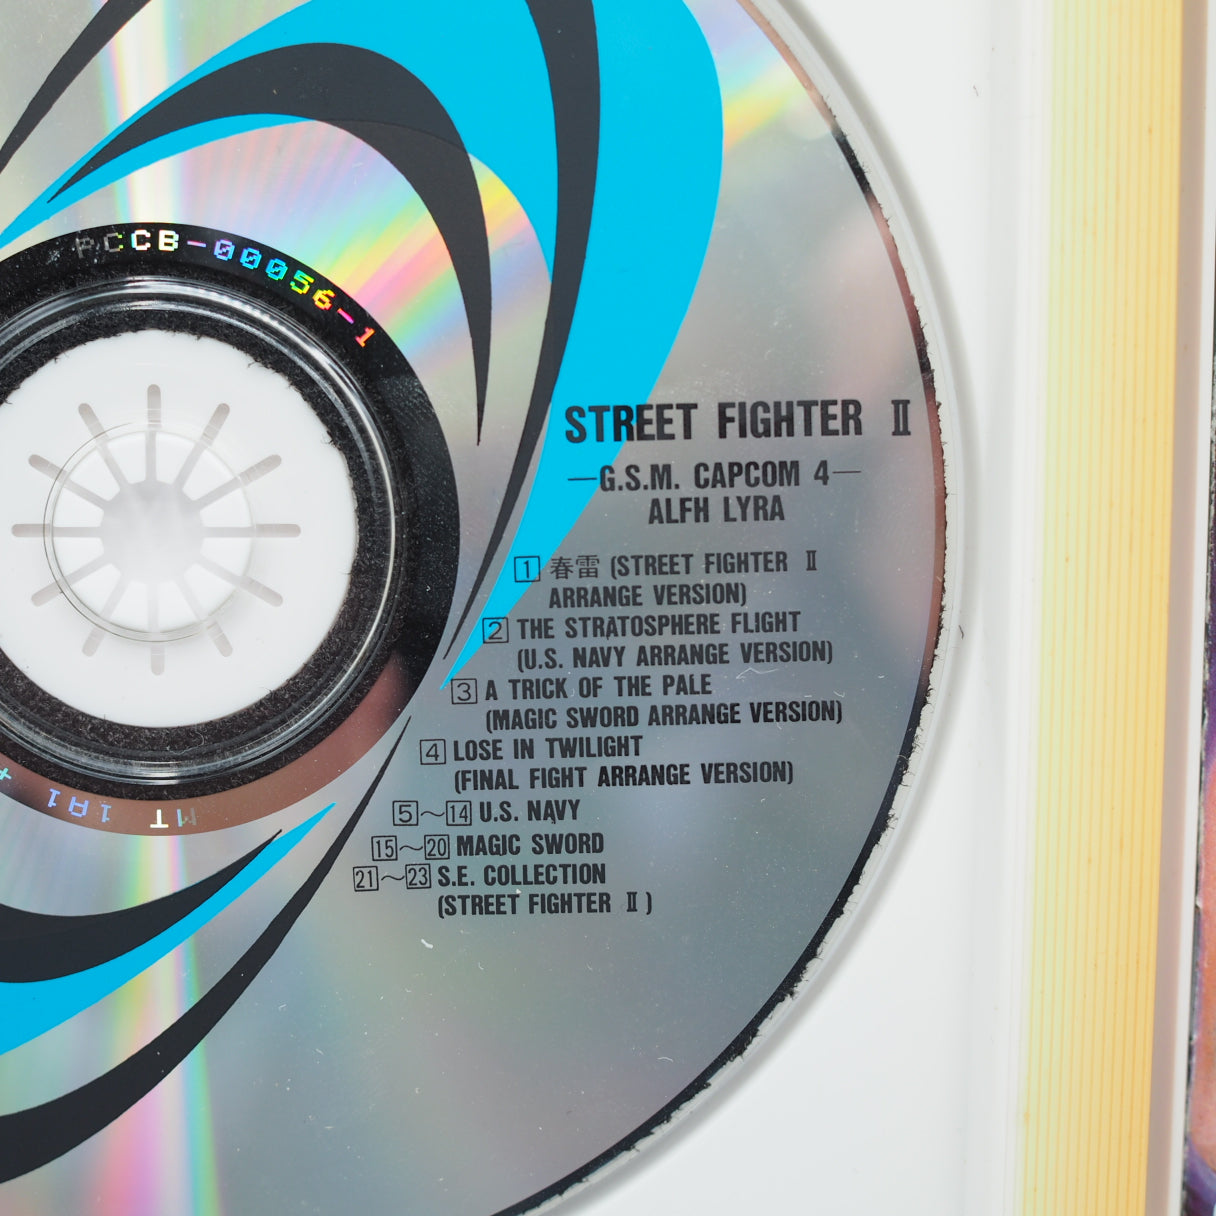 STREET FIGHTER II -G.S.M.CAPCOM 4-